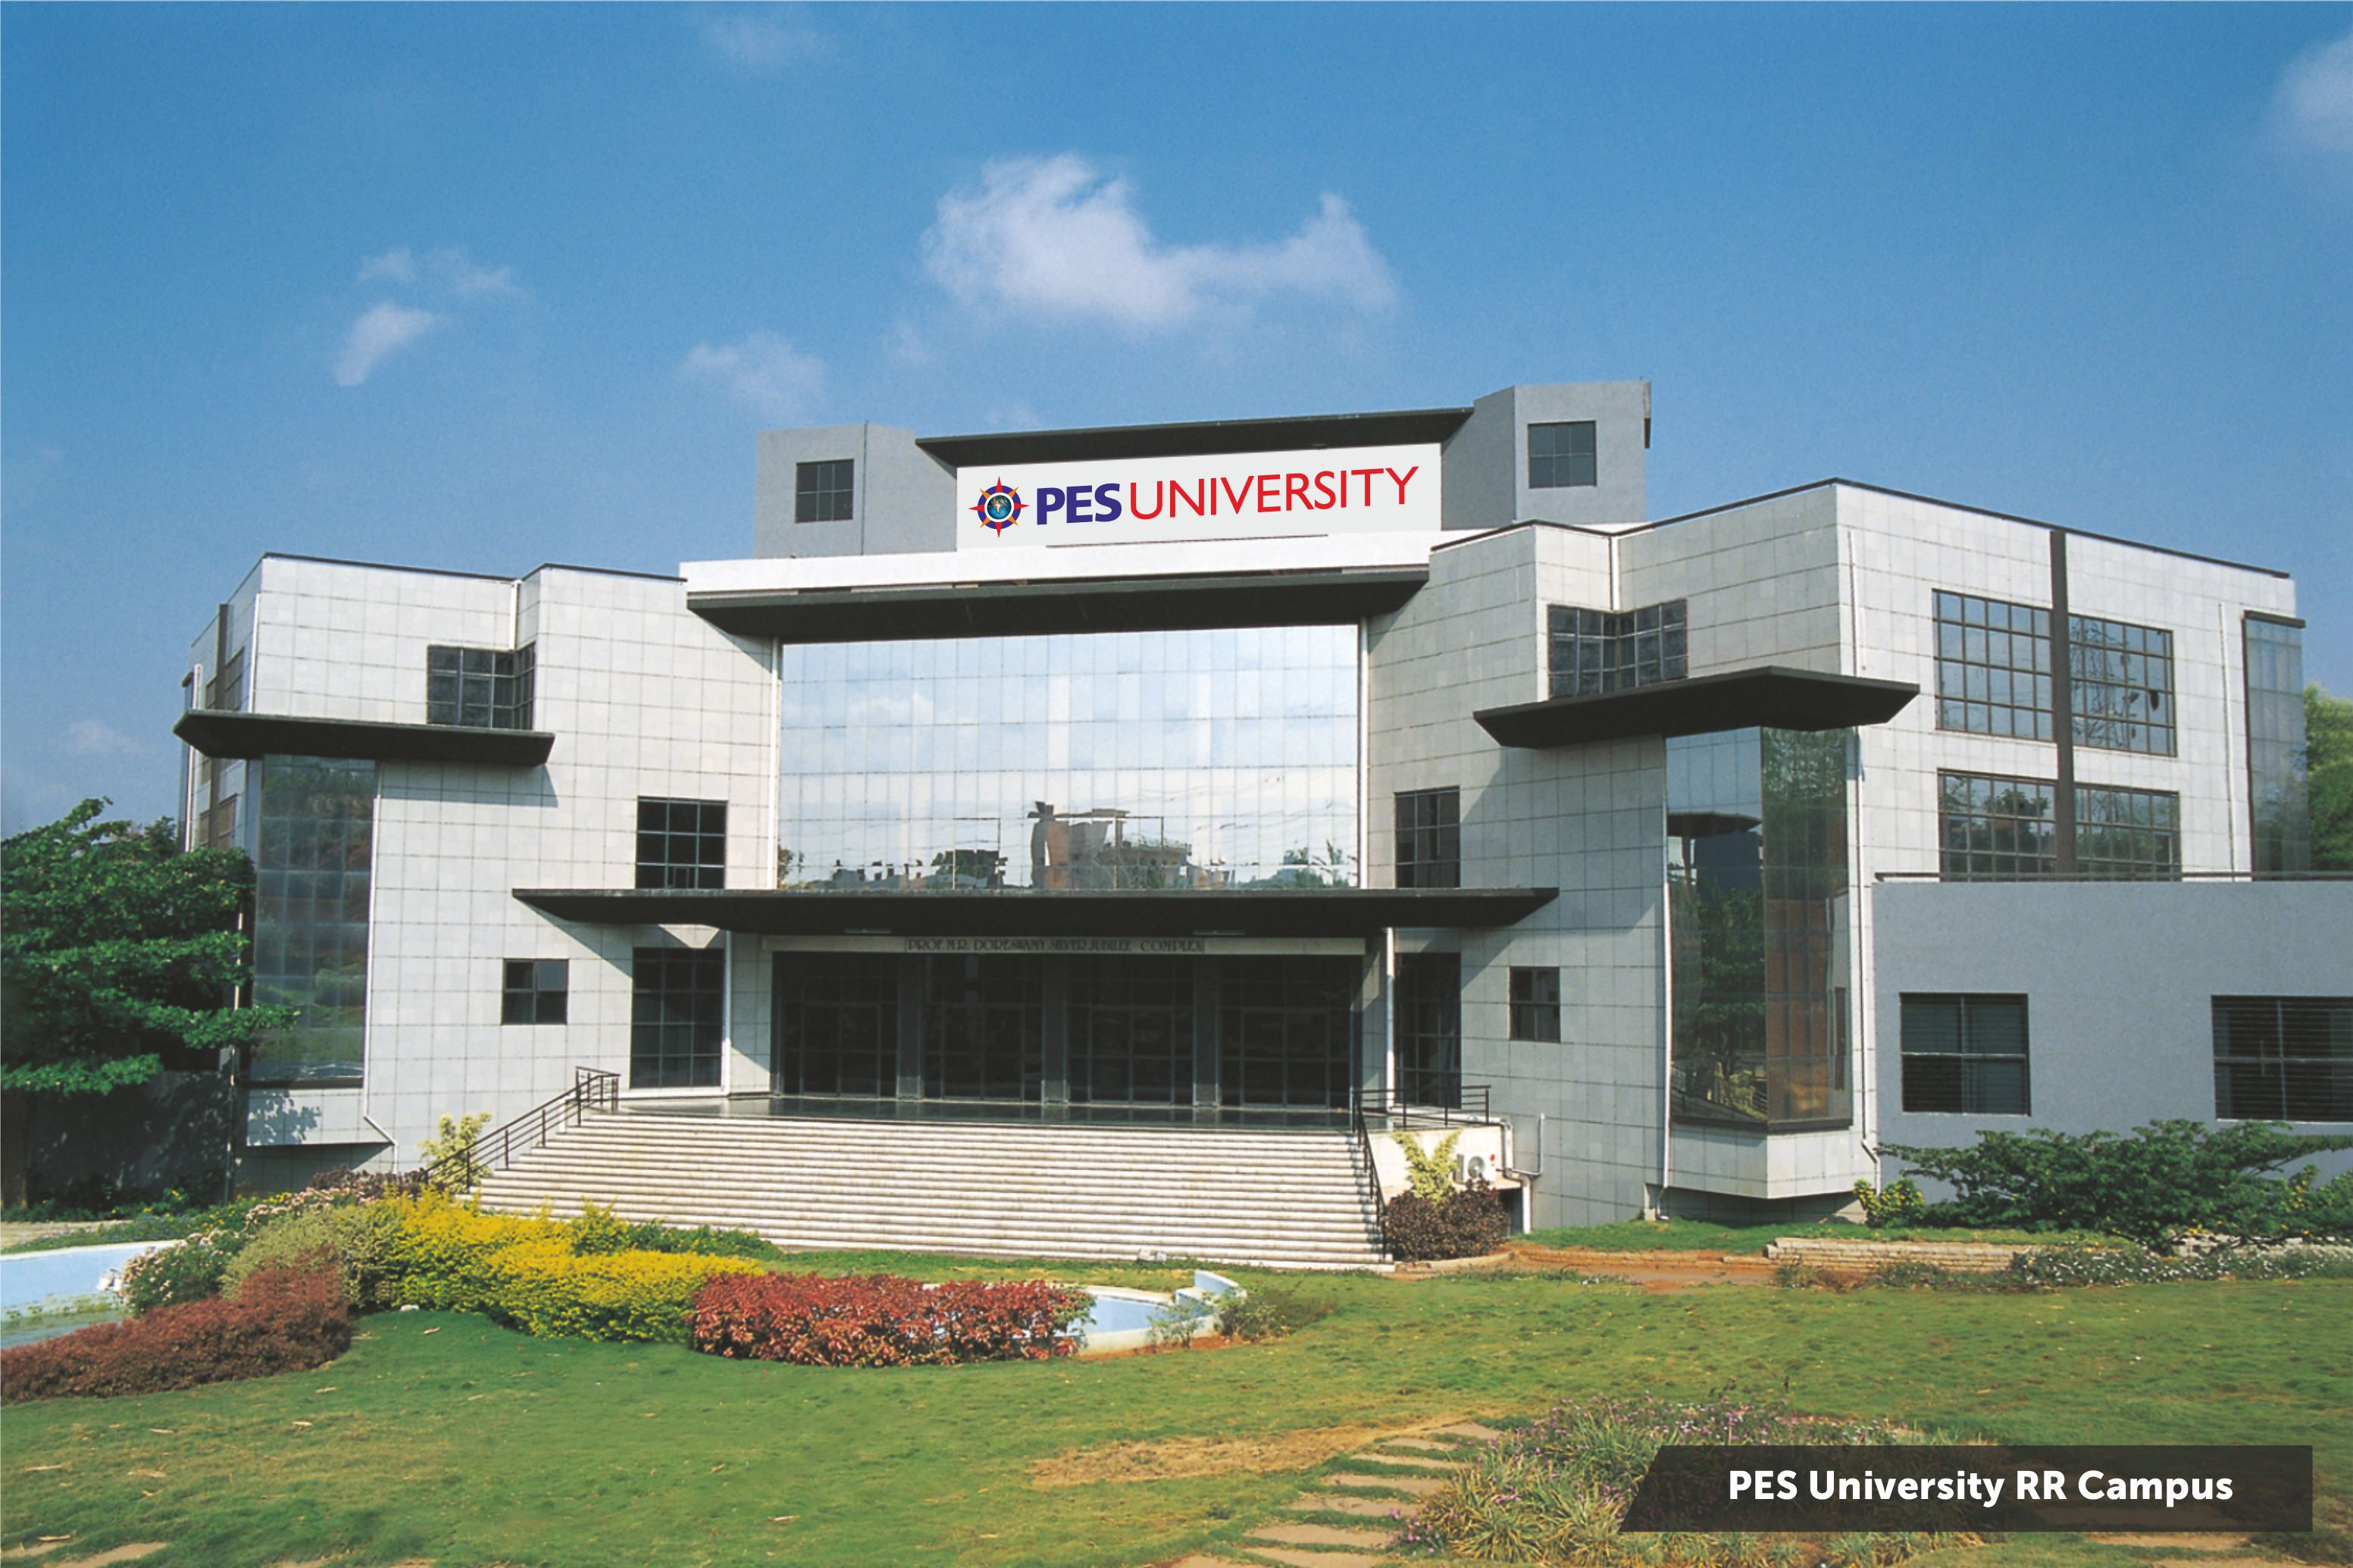 PES University - PES University added a new photo.